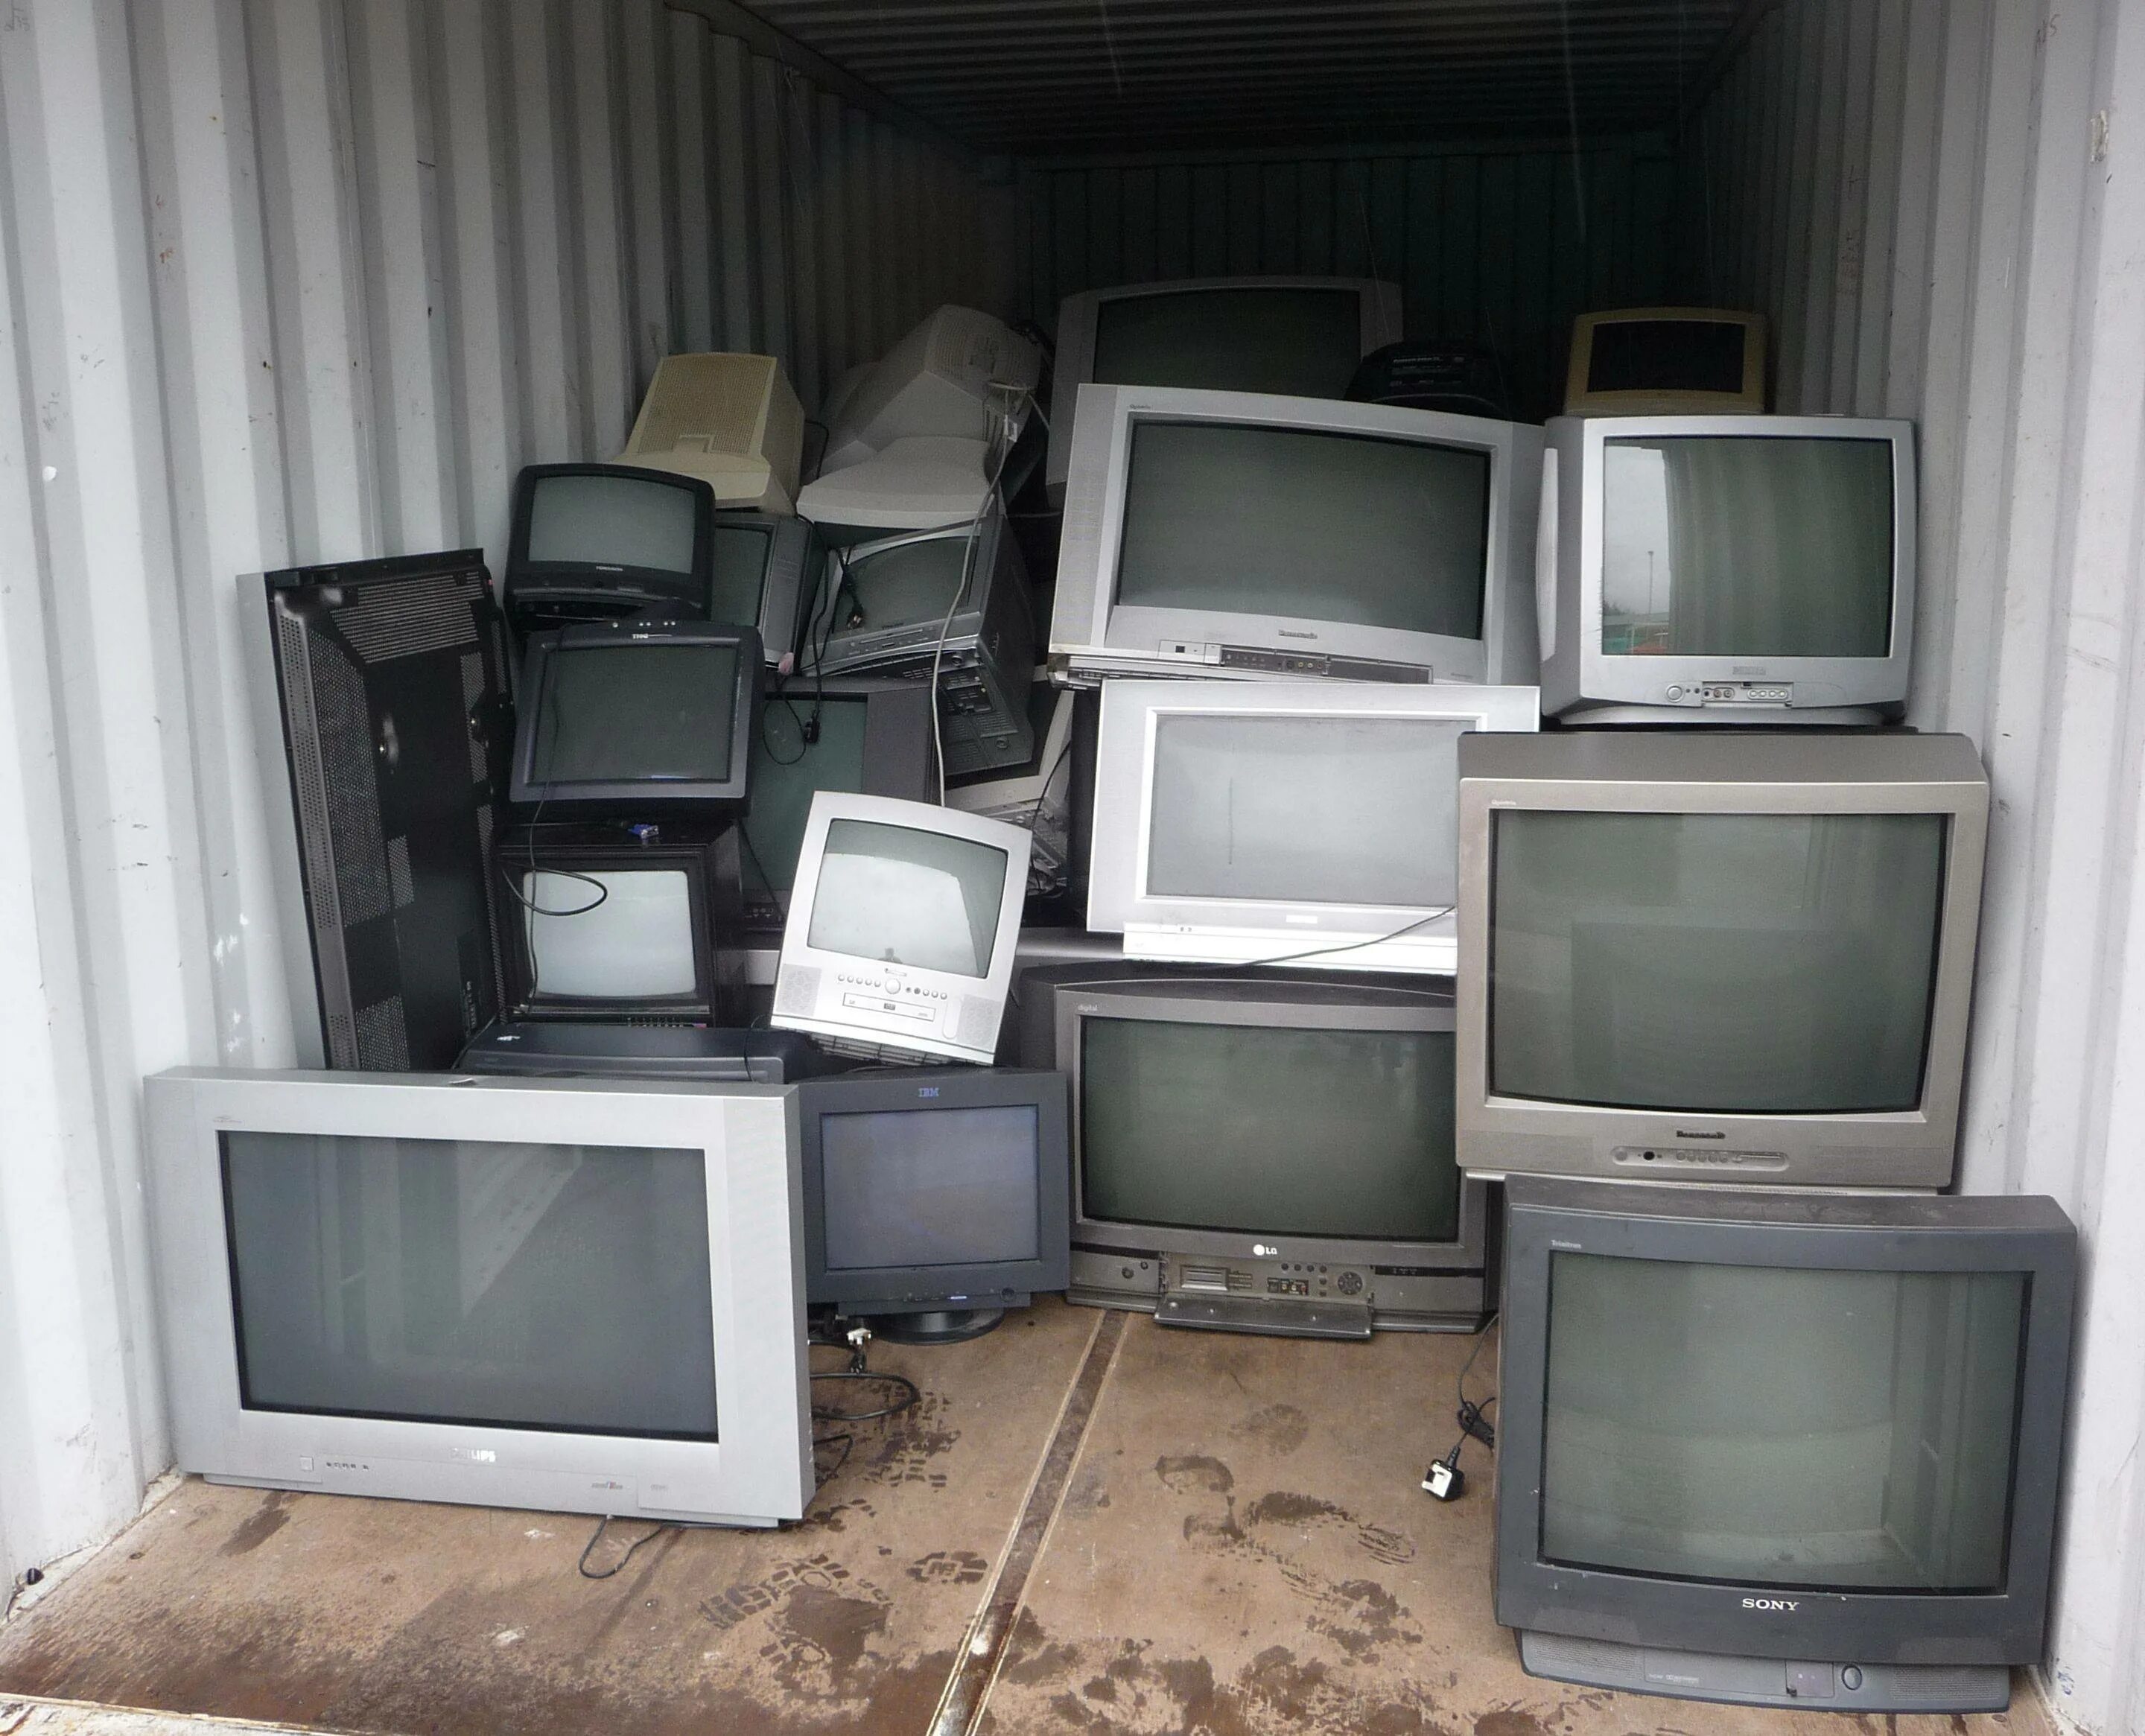 Старый телевизор. Телевизор с кинескопом. Скупают старые телевизоры. Старый кинескопный телевизор. Сдать бу телевизор